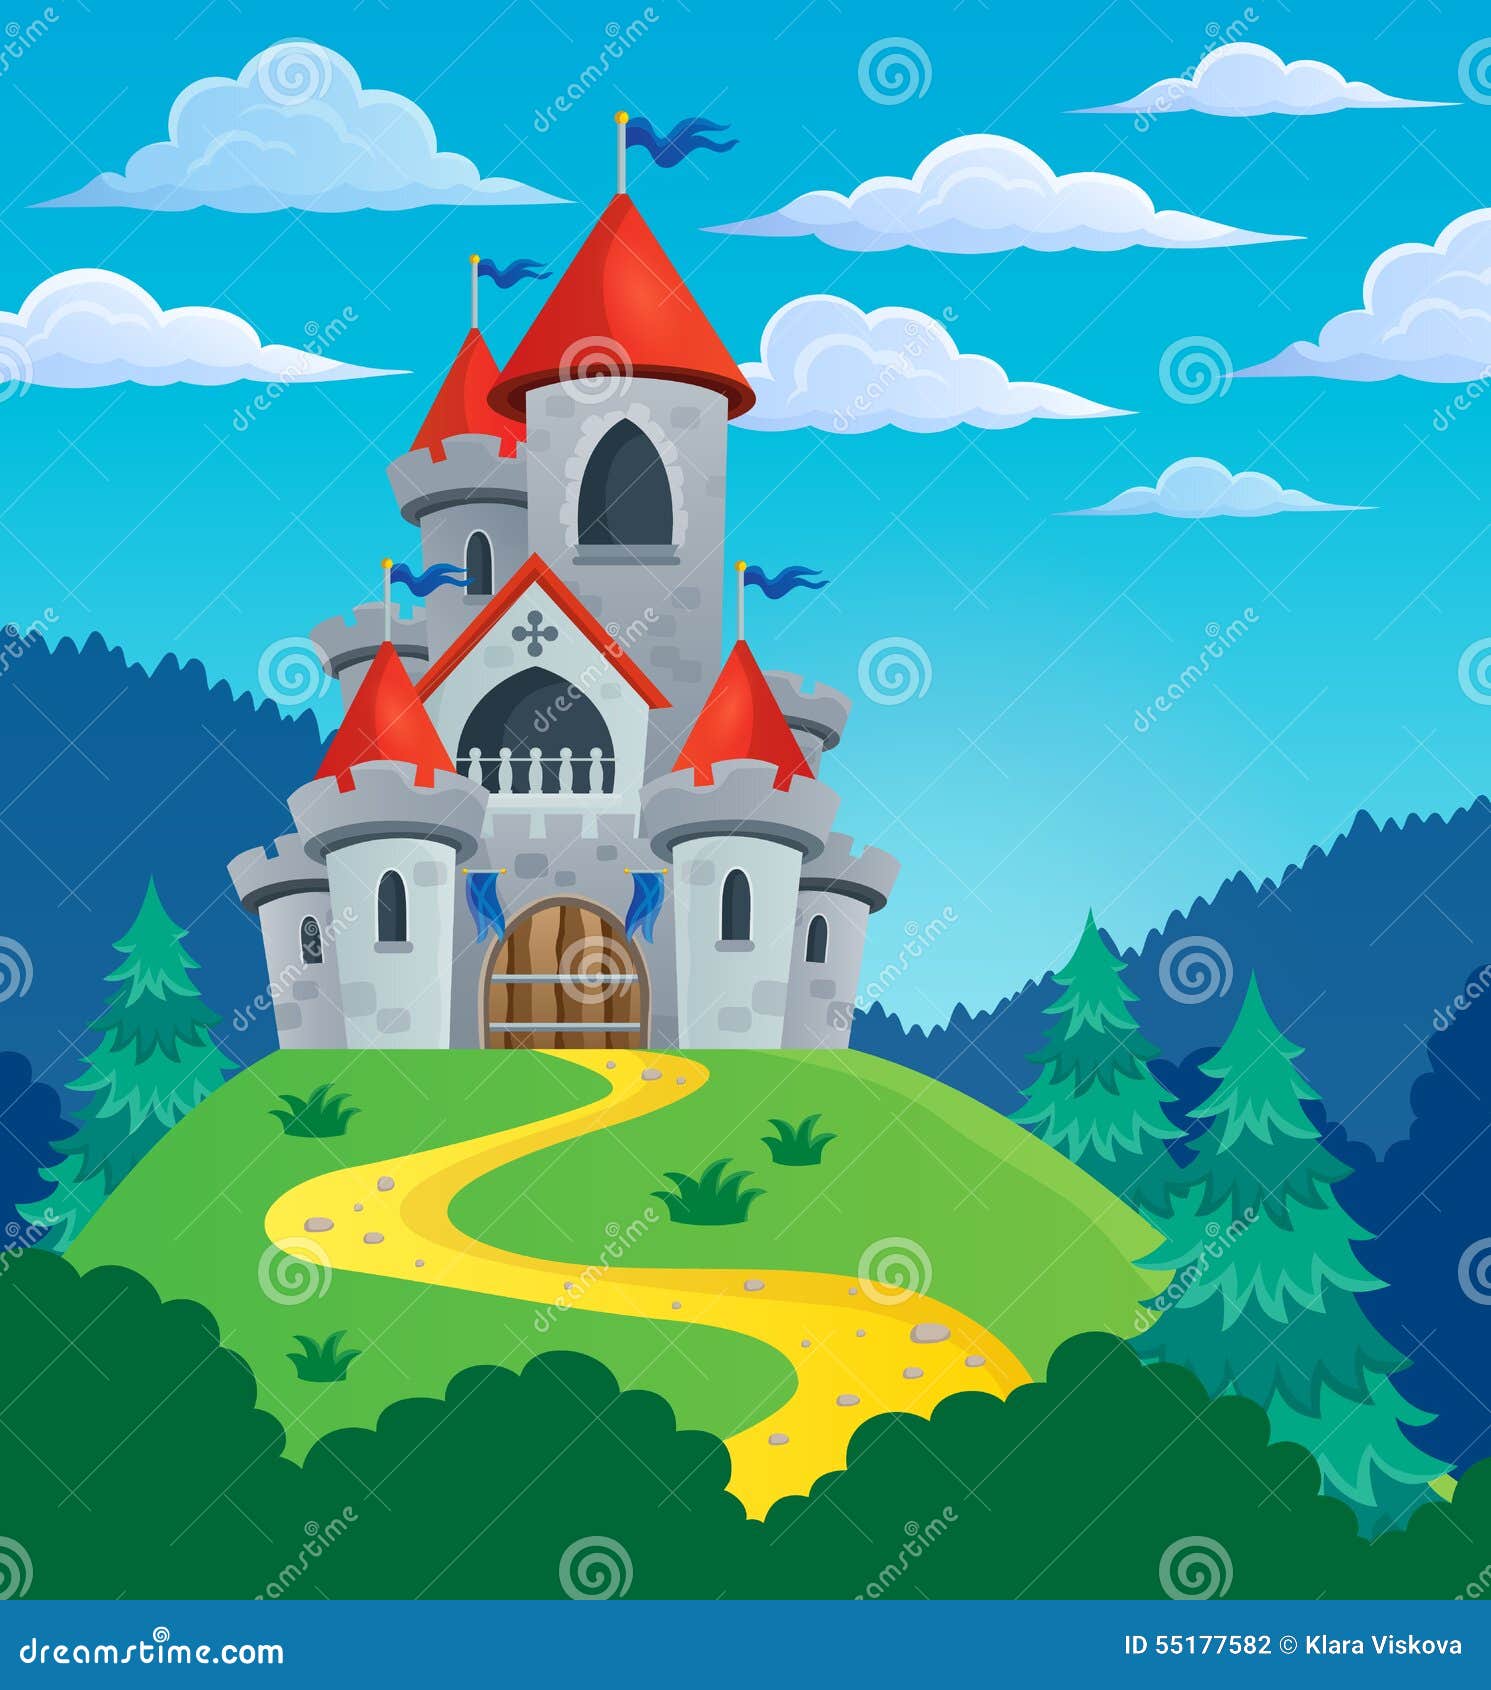 fairy tale castle theme image 3